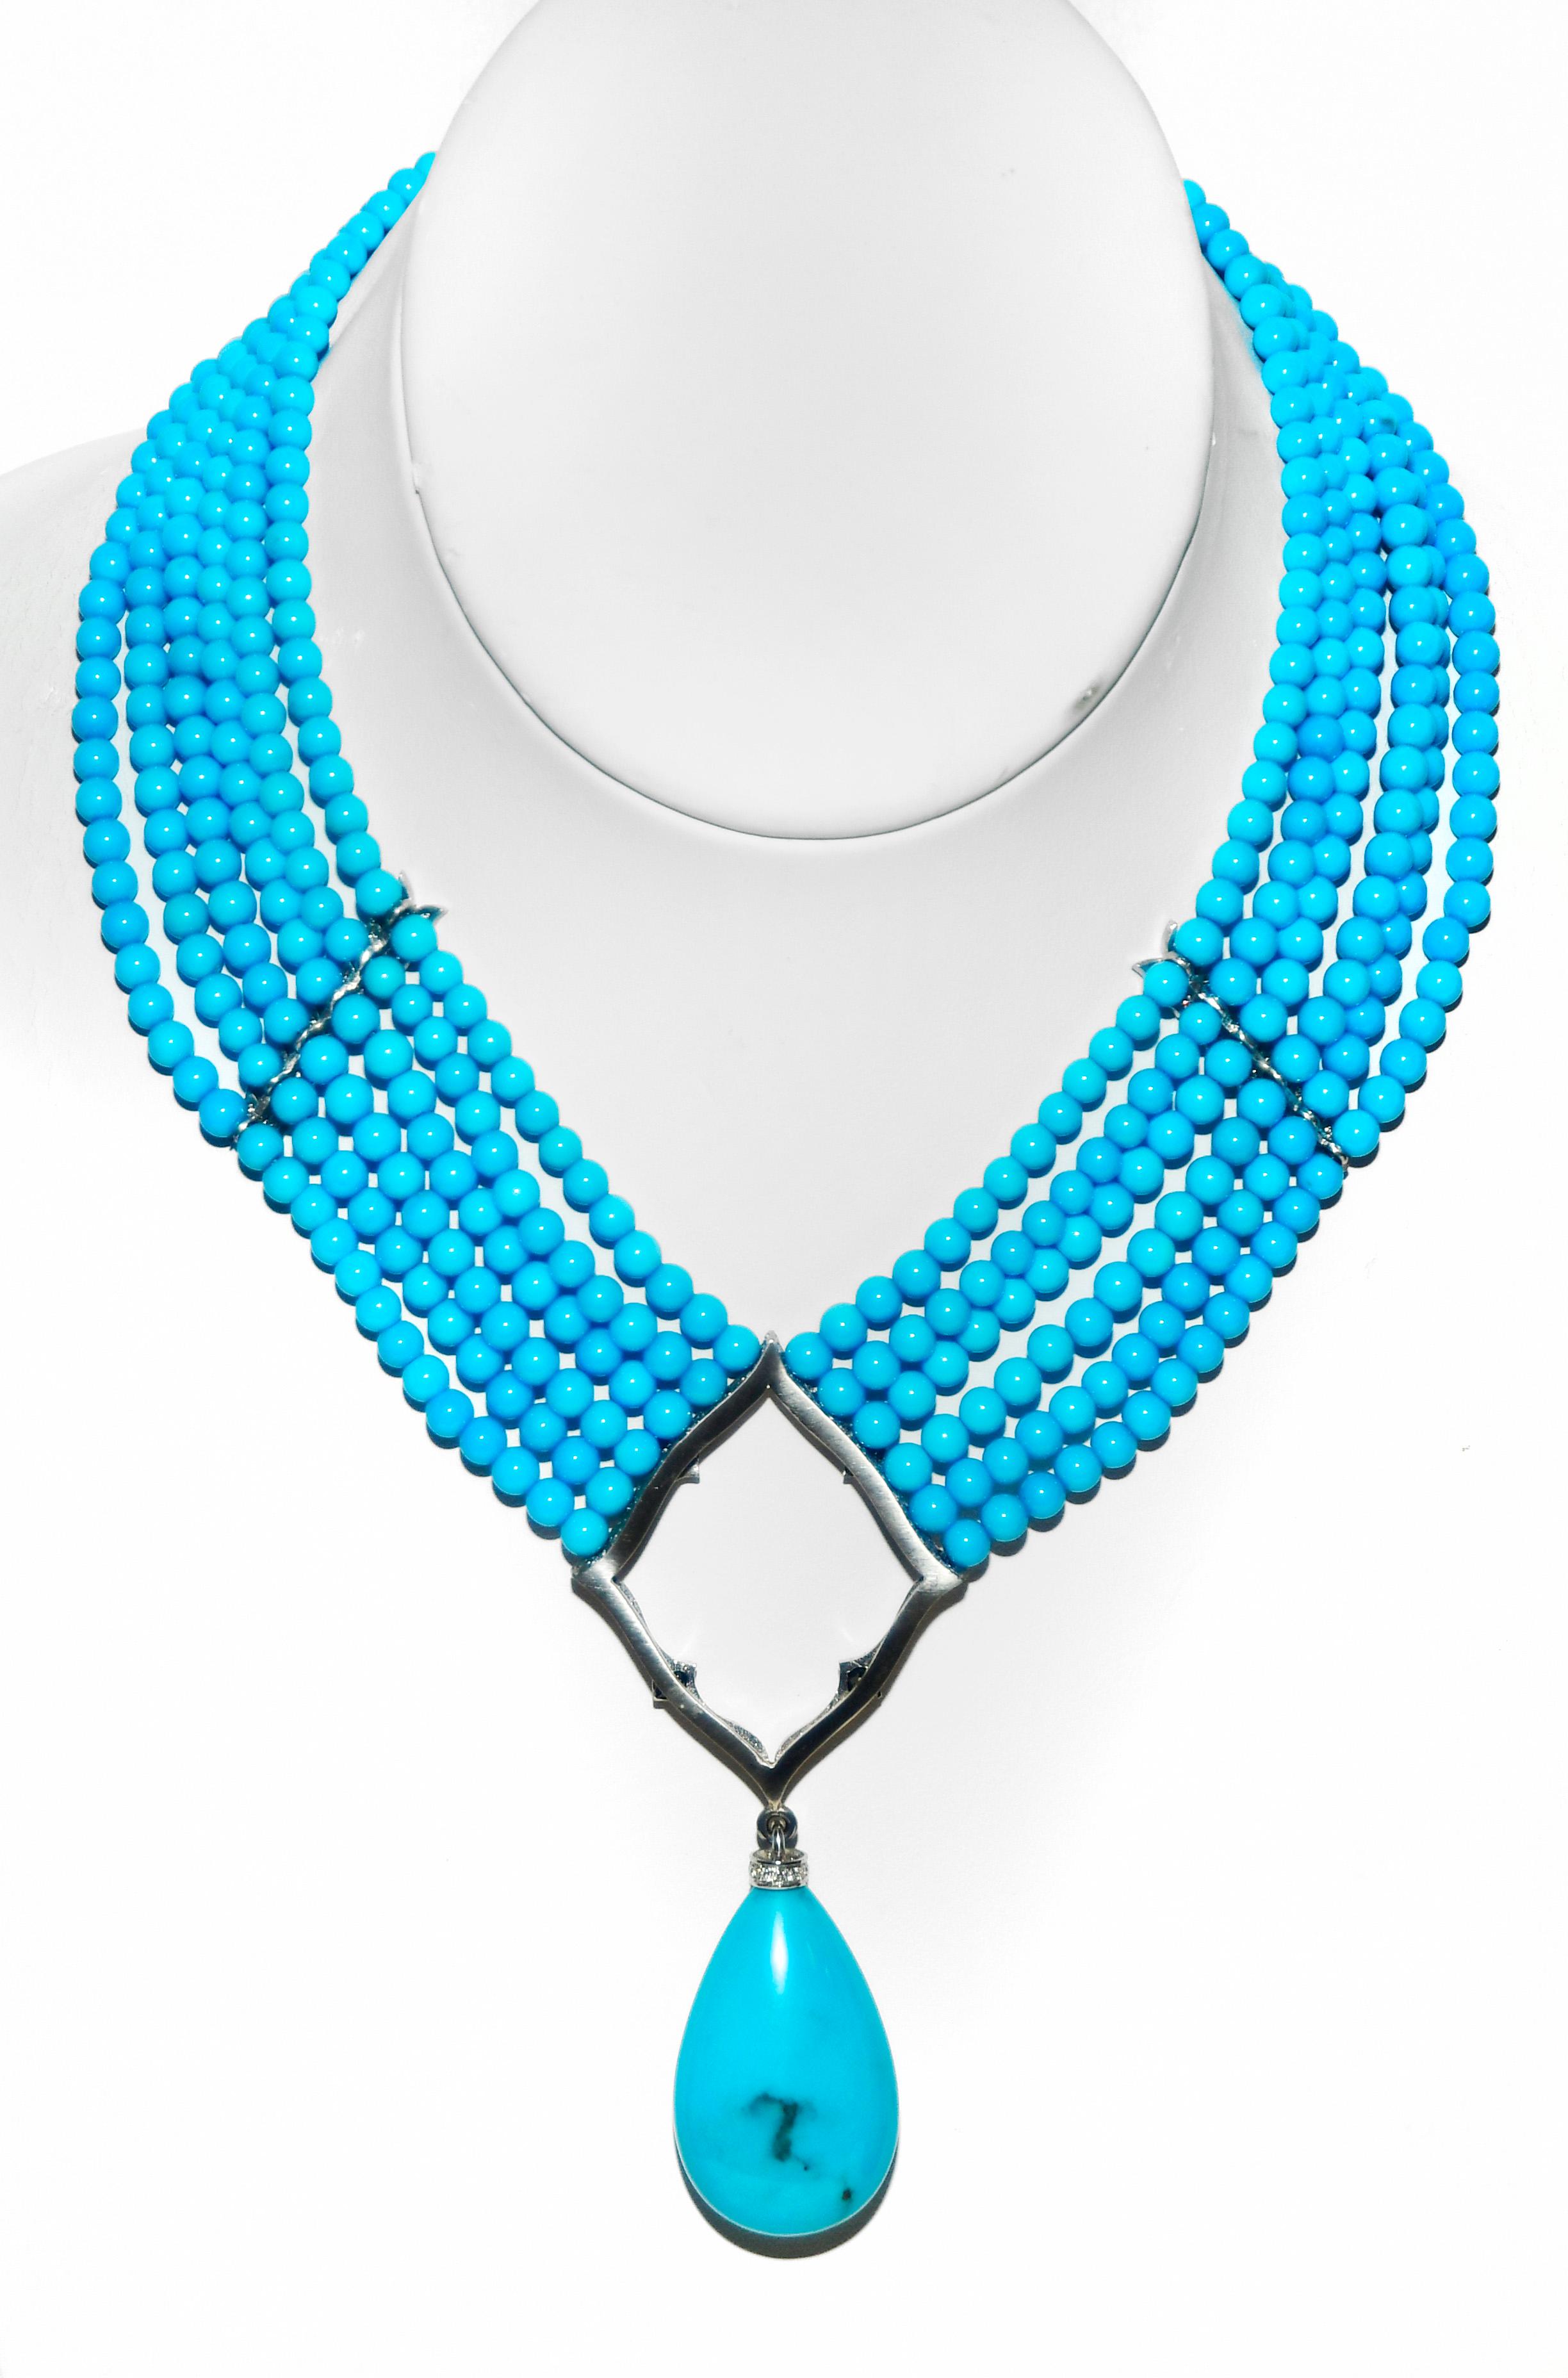 Artisan Loree Rodkin Rare Sleeping Beauty Turquoise Diamond Sapphire Necklace